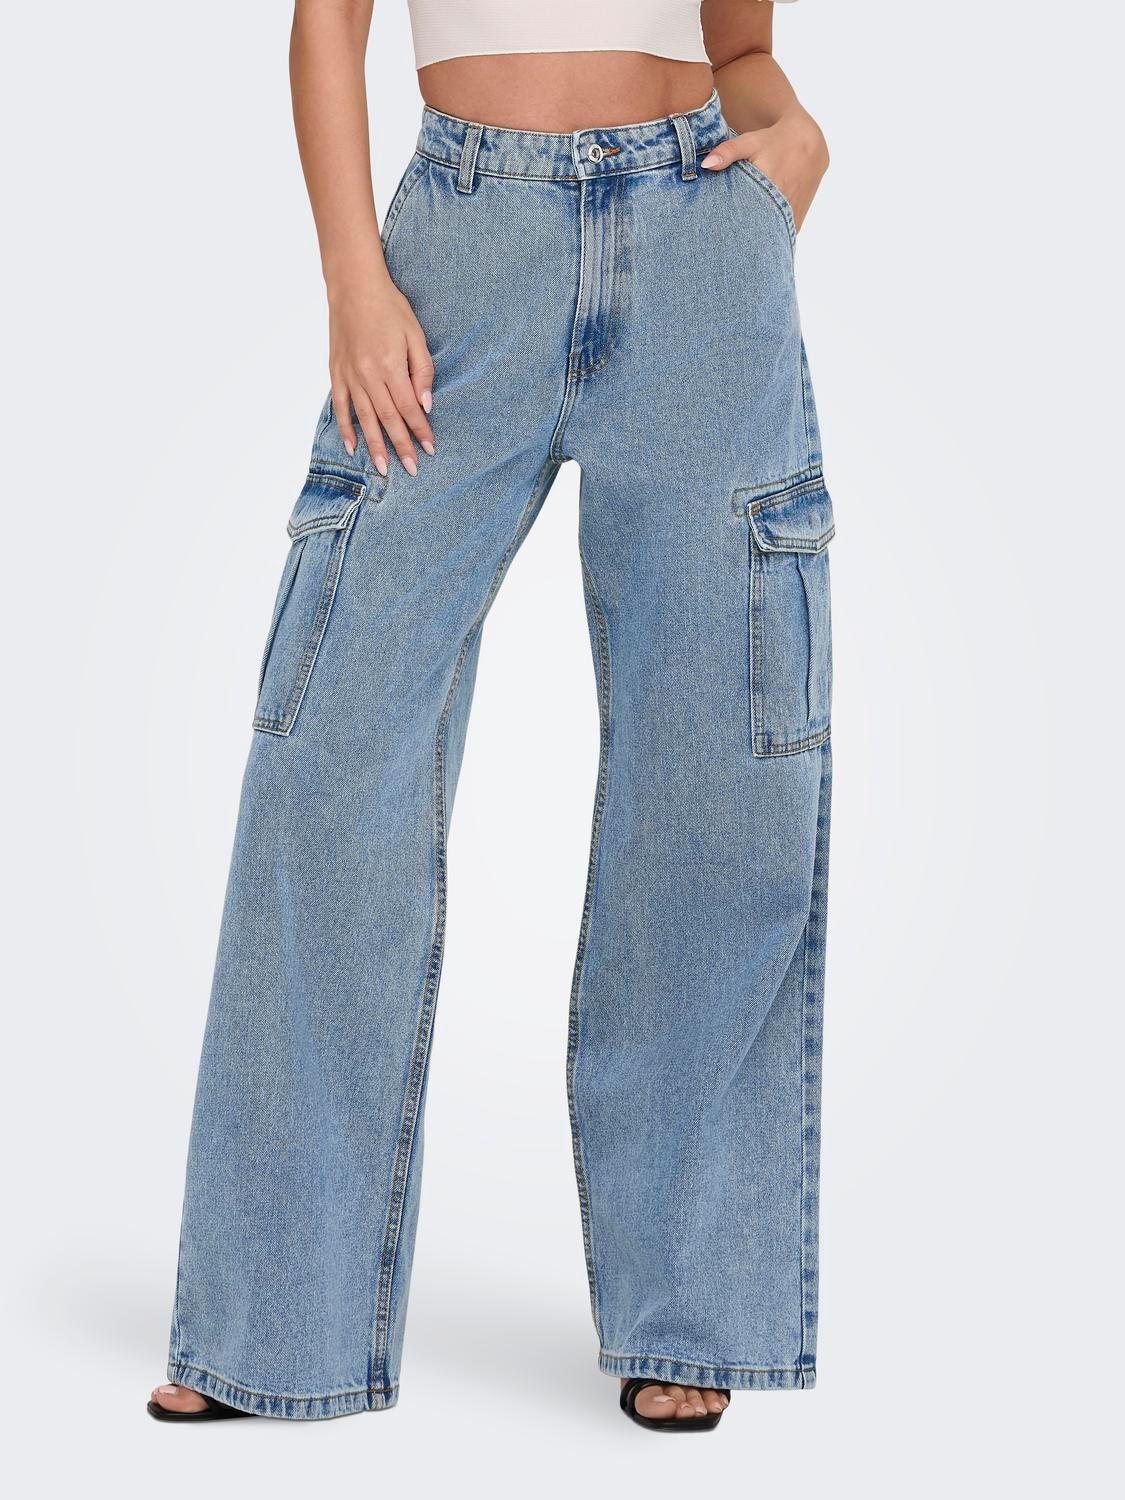 Plus Size Women Vintage Y2k Big Pockets Cargo Pants Baggy Straight Women's  Jeans